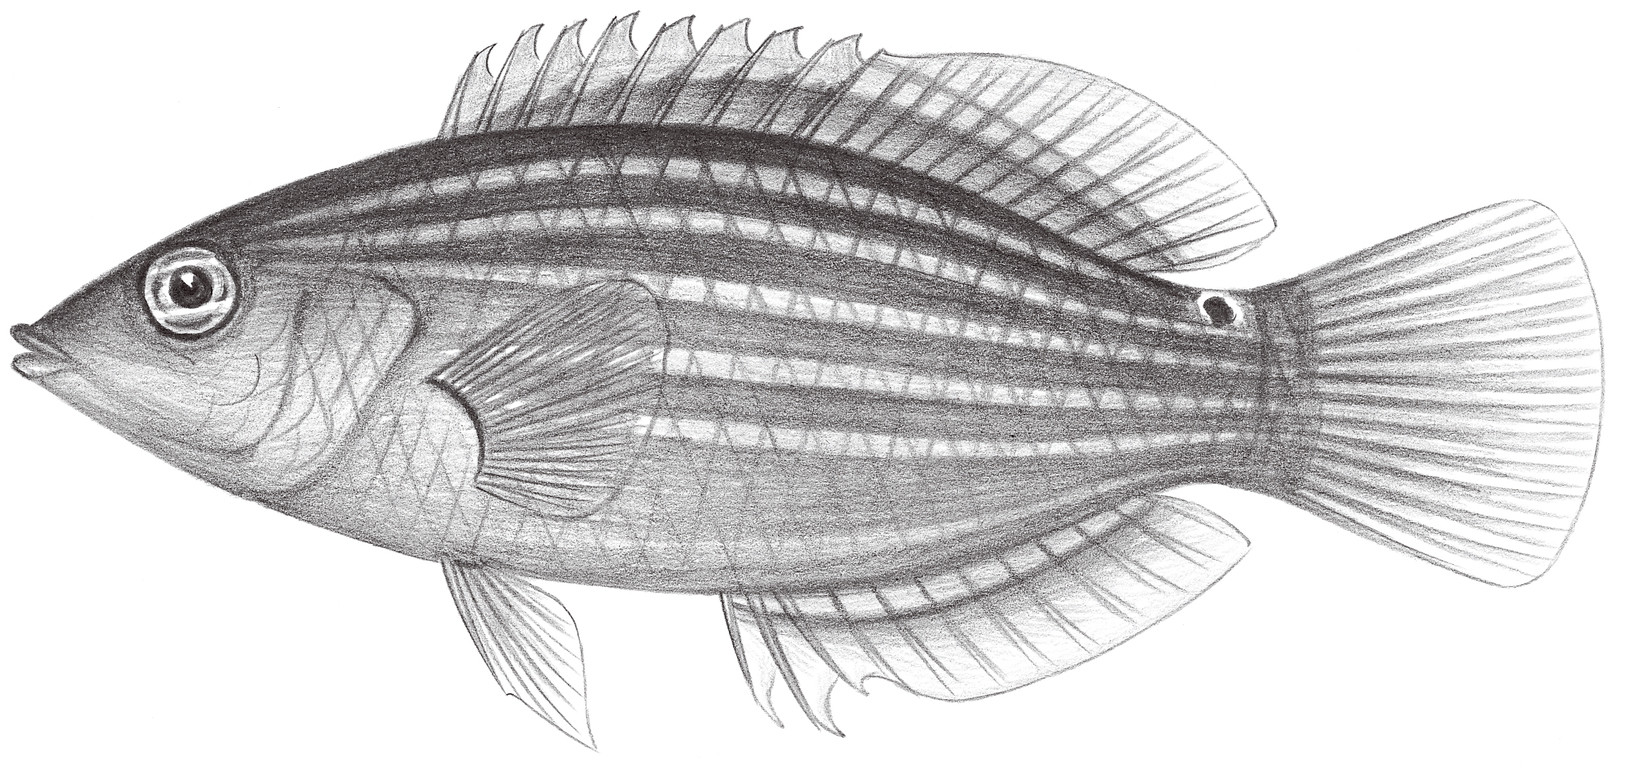 1817.	六帶擬唇魚 Pseudocheilinus hexataenia (Bleeker, 1857)